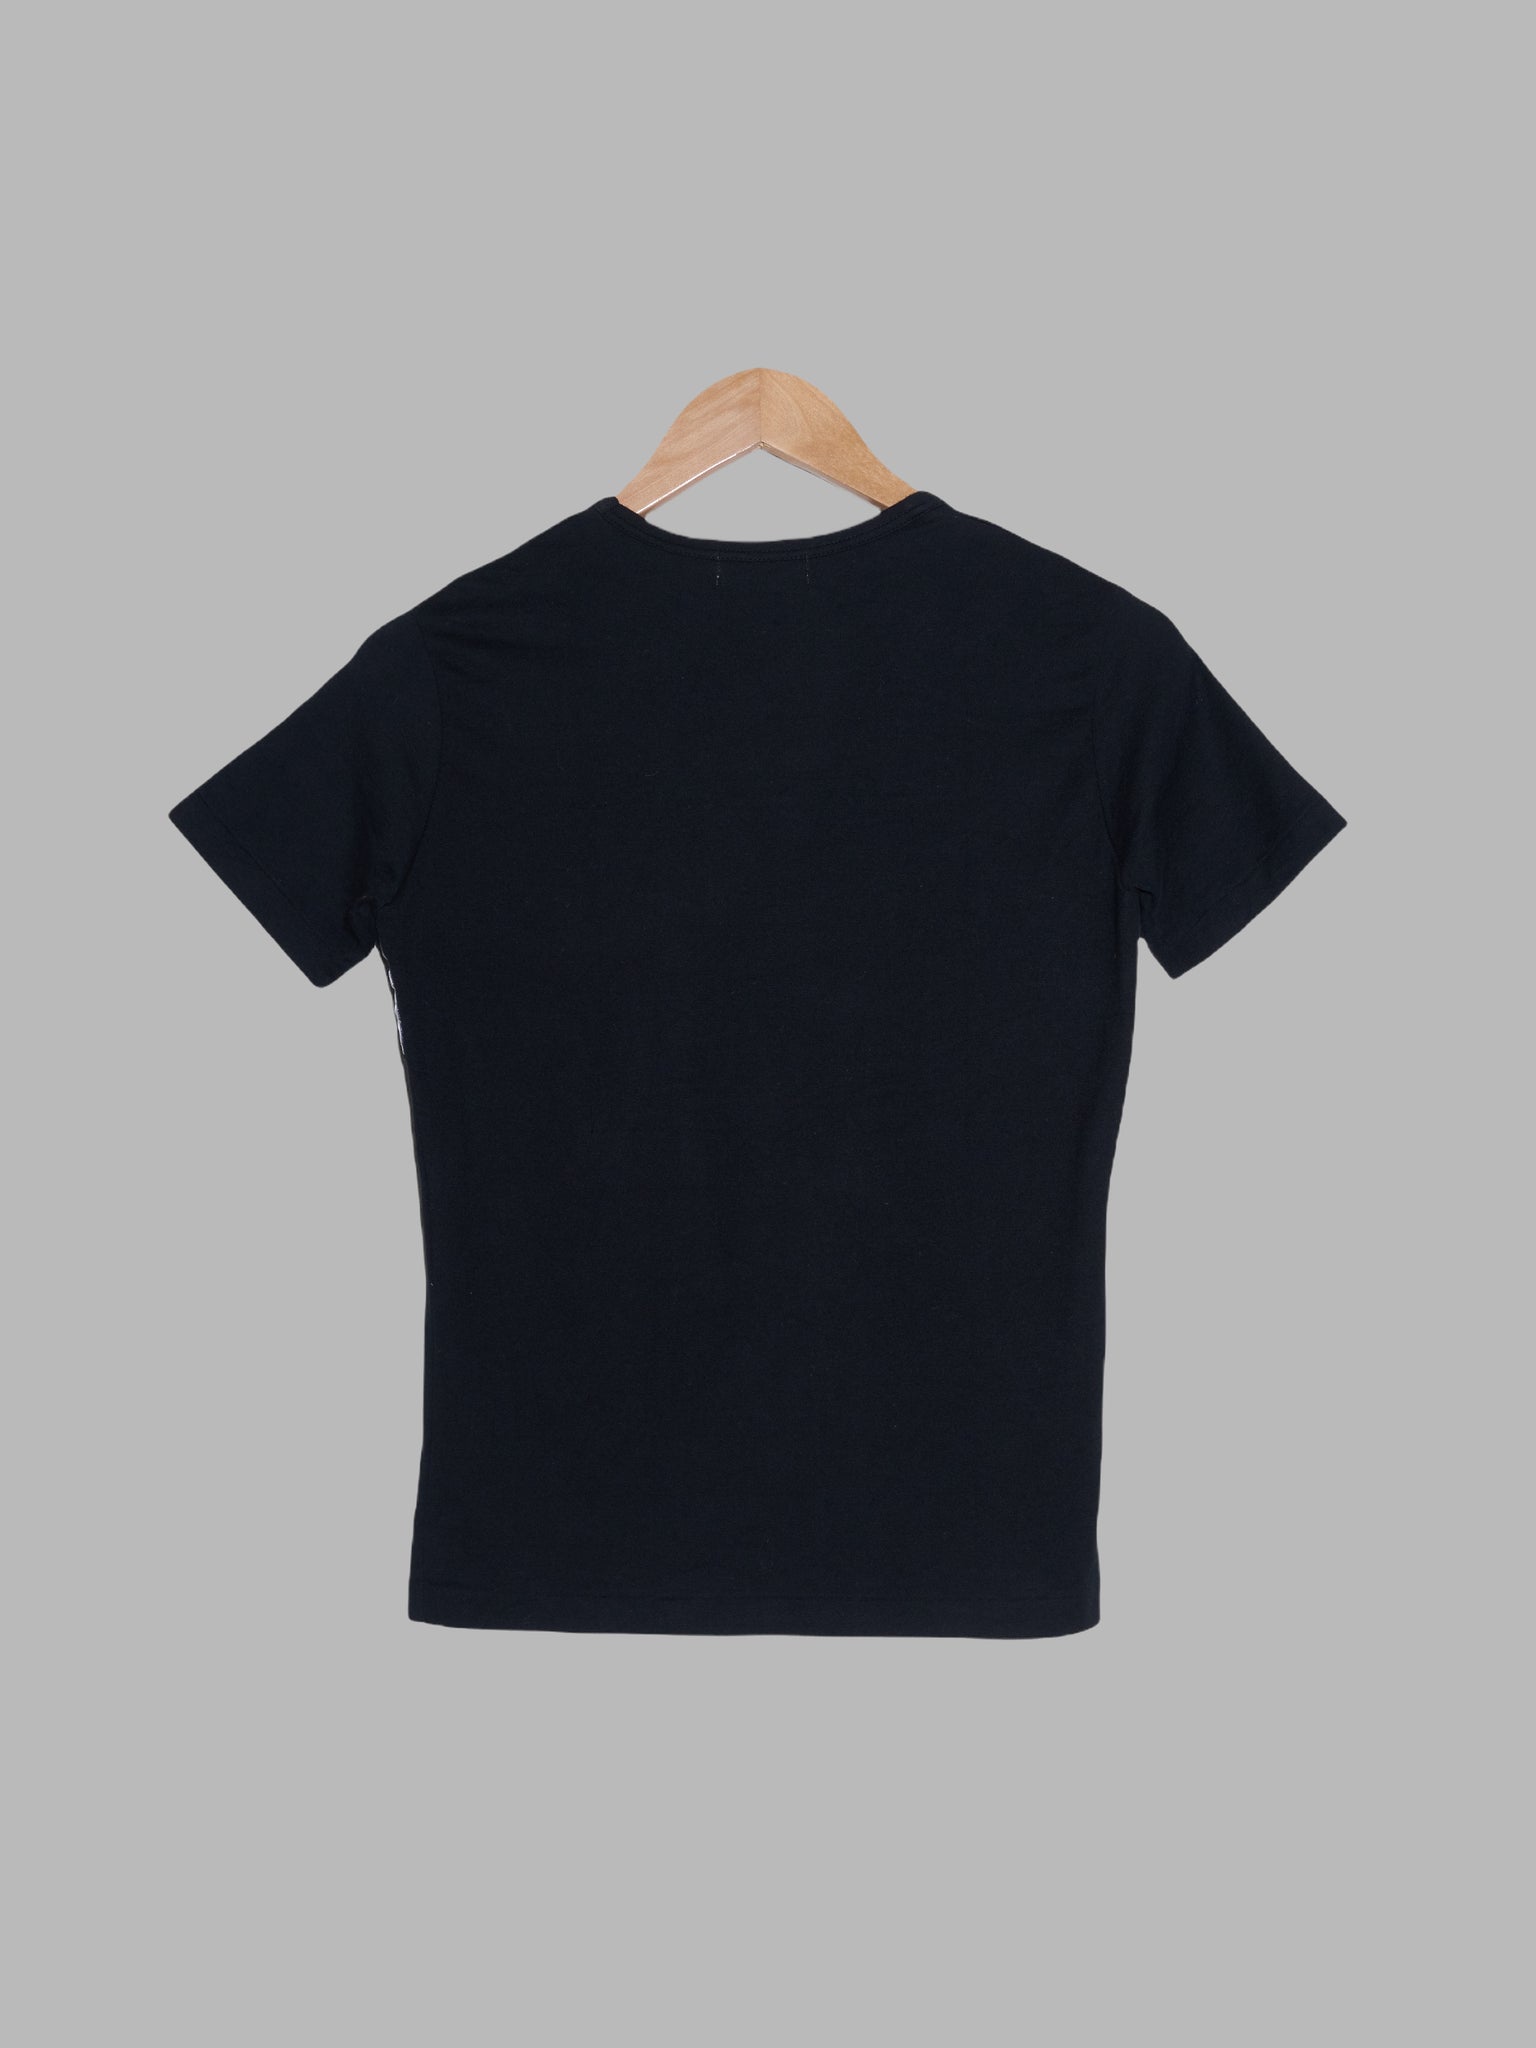 Yoichi Nagasawa 1990s black cotton t-shirt with sheer organza chest pocket